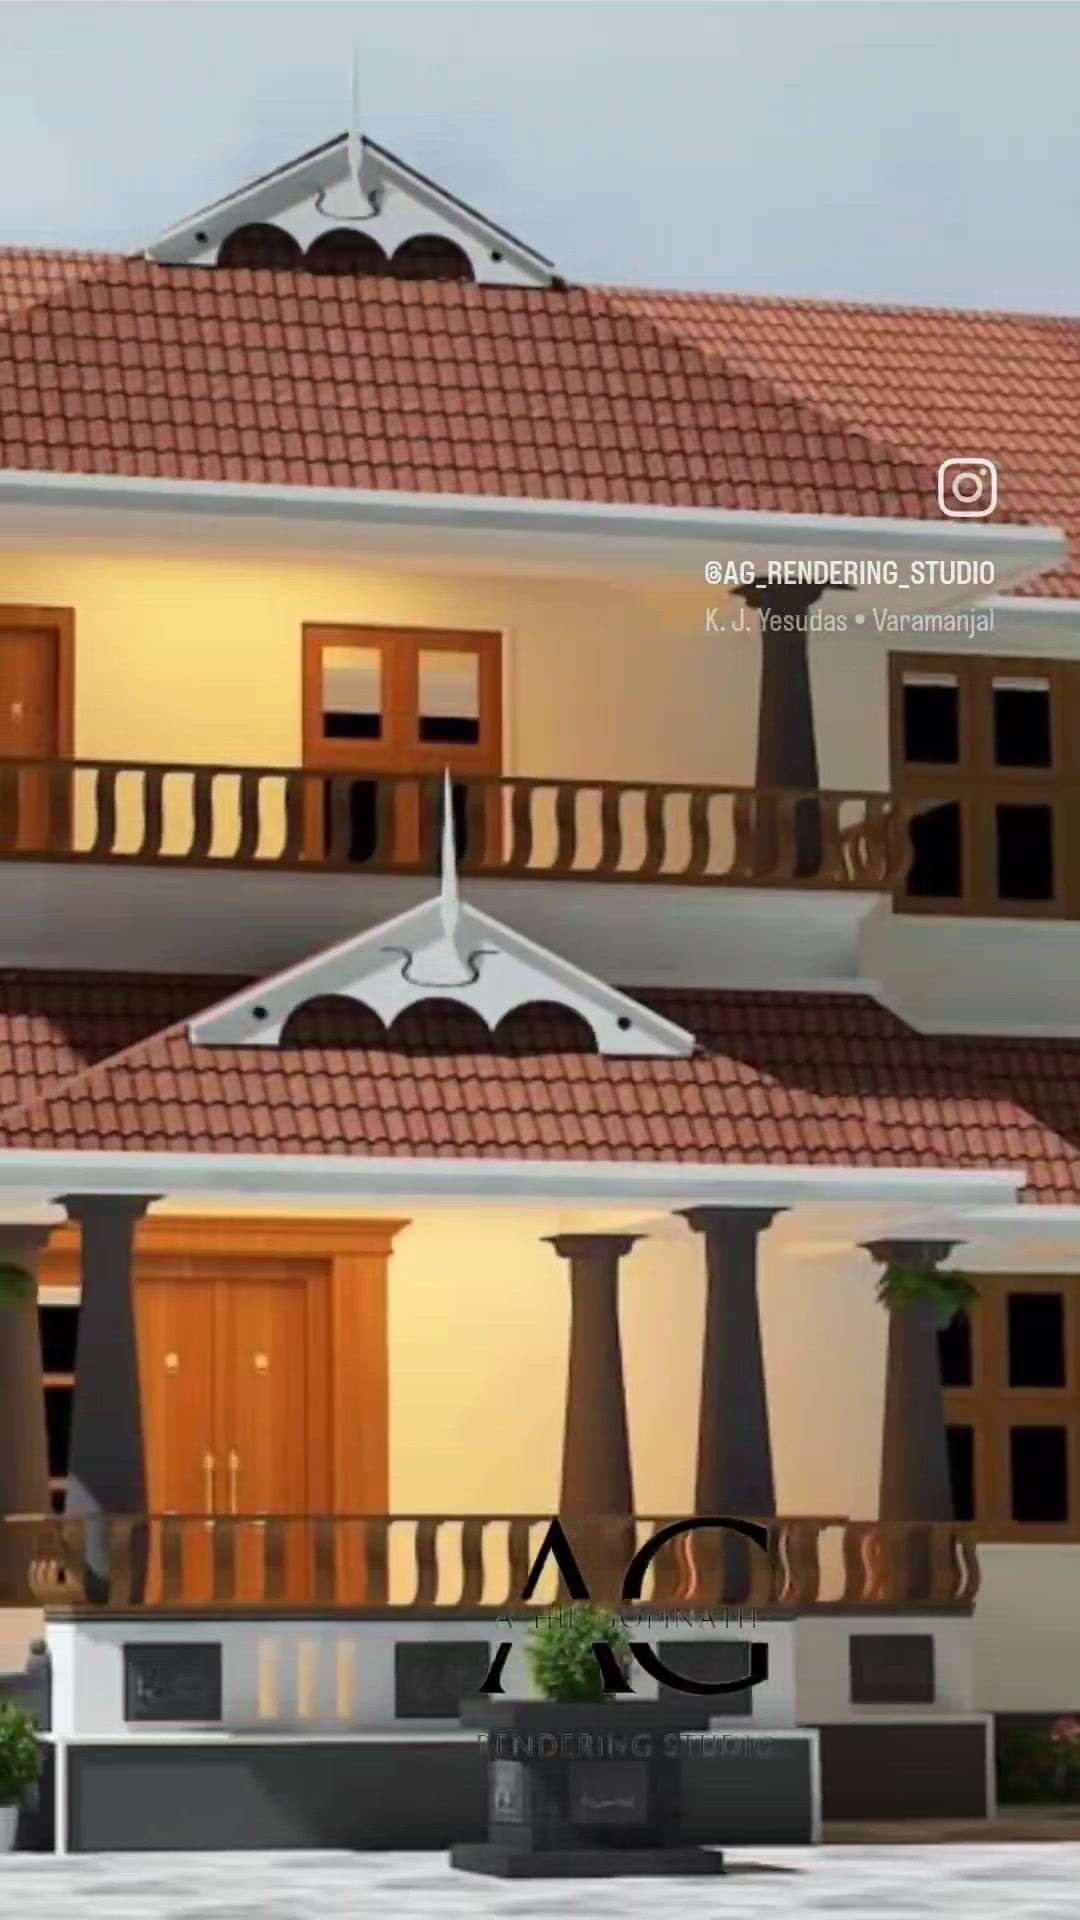 Traditional Design @Thrissur
2500 Sqft 4BHK
#3D_ELEVATION #3dmodeling #3drending #3dmodeling #3delevationhome #3delevation🏠🏡 #3delevations #TraditionalHouse #traditiinal #traditional_style #traditionalhousedesingkerala #traditionalhousedesingkerala #traditionalhomedecor #KeralaStyleHouse #keralahomestyle #keraladesigns #KeralaStyleHouse #keralatraditionalarchitecture #keralahomedesignz #keralaarchitectures #keralaveedu #naalukettuveedu #naalukettuveedudesingn #naalukettuveedukerala #naalukettuveeduplan #naalukettuveedu #beautifulhouse #veedupani #veedudesign #veeduvanitha